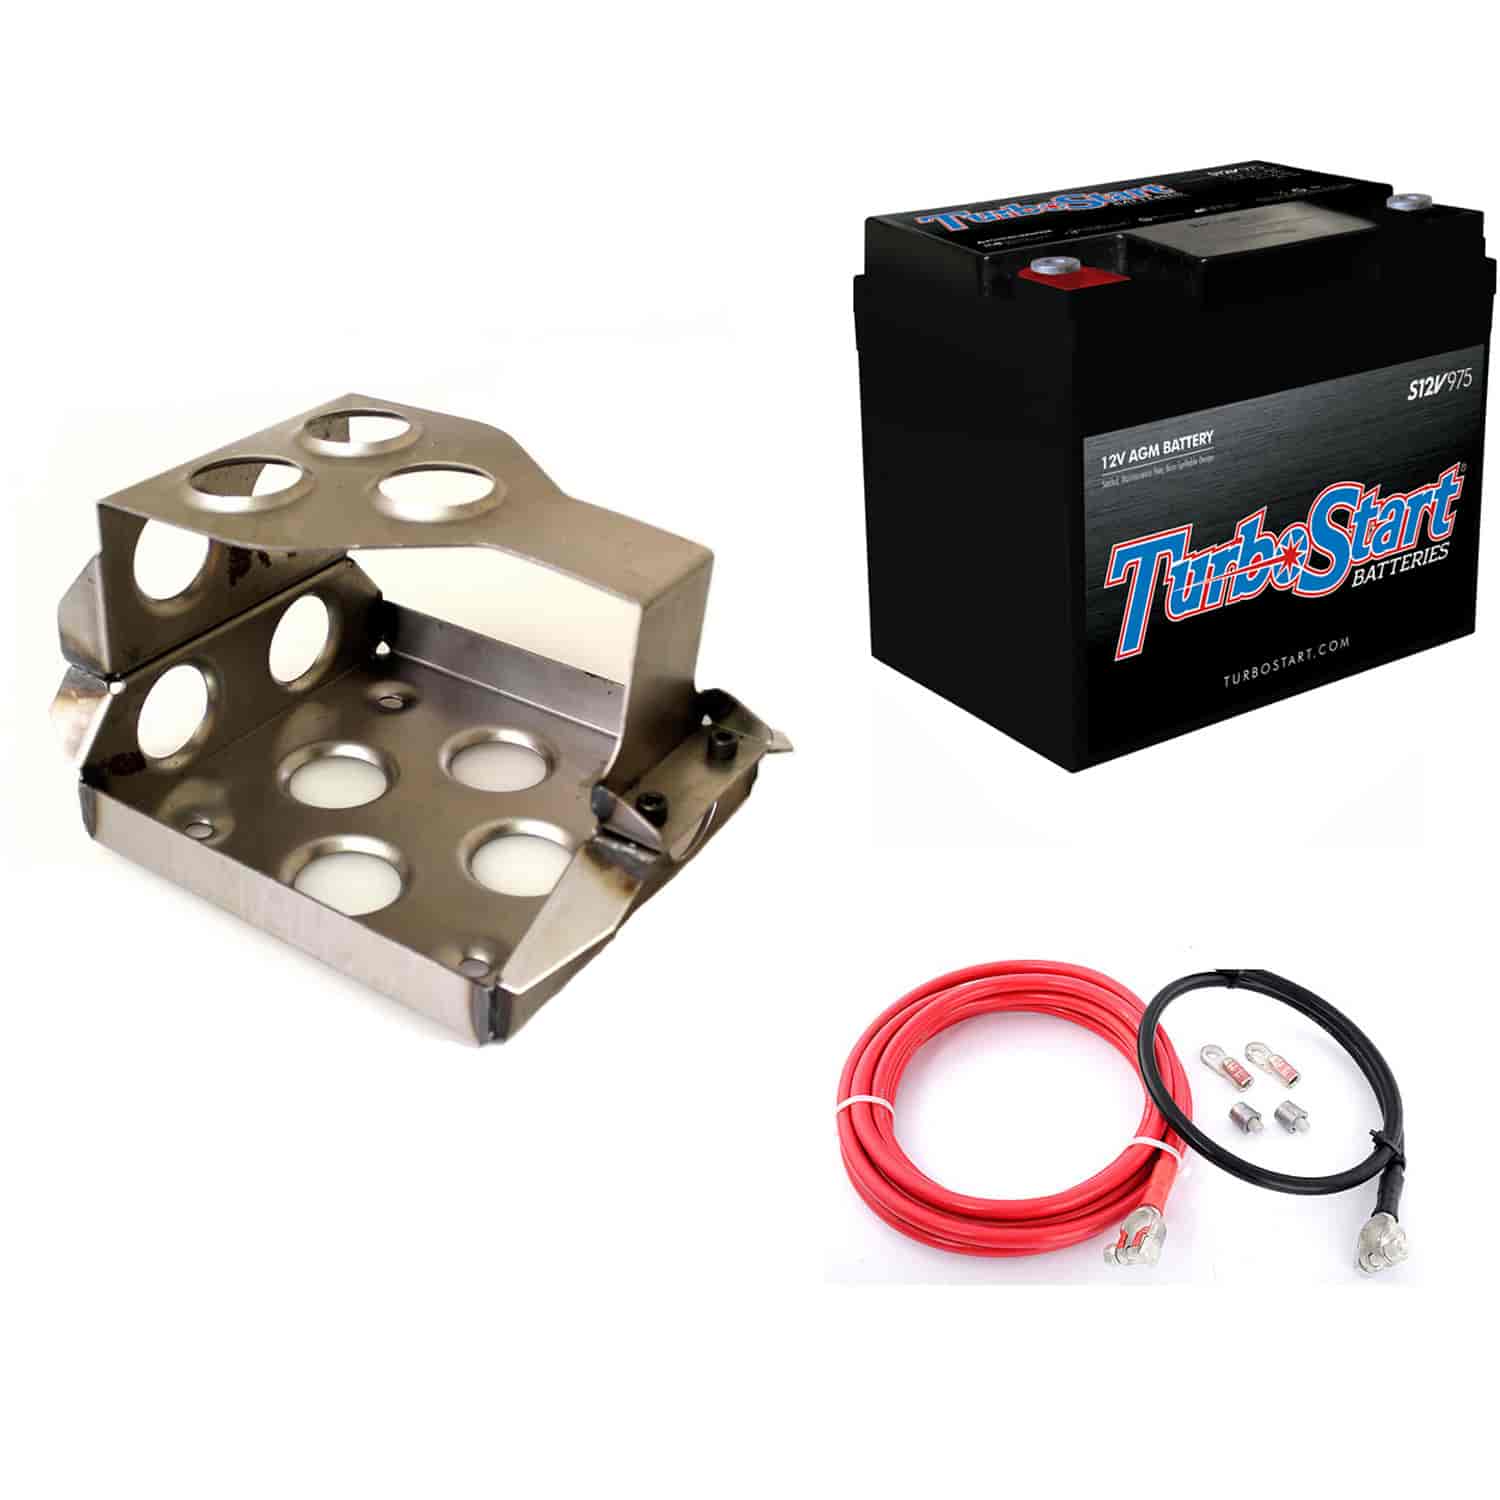 Battery Mount Kit Includes: Turbo Start 12 Volt Race Battery